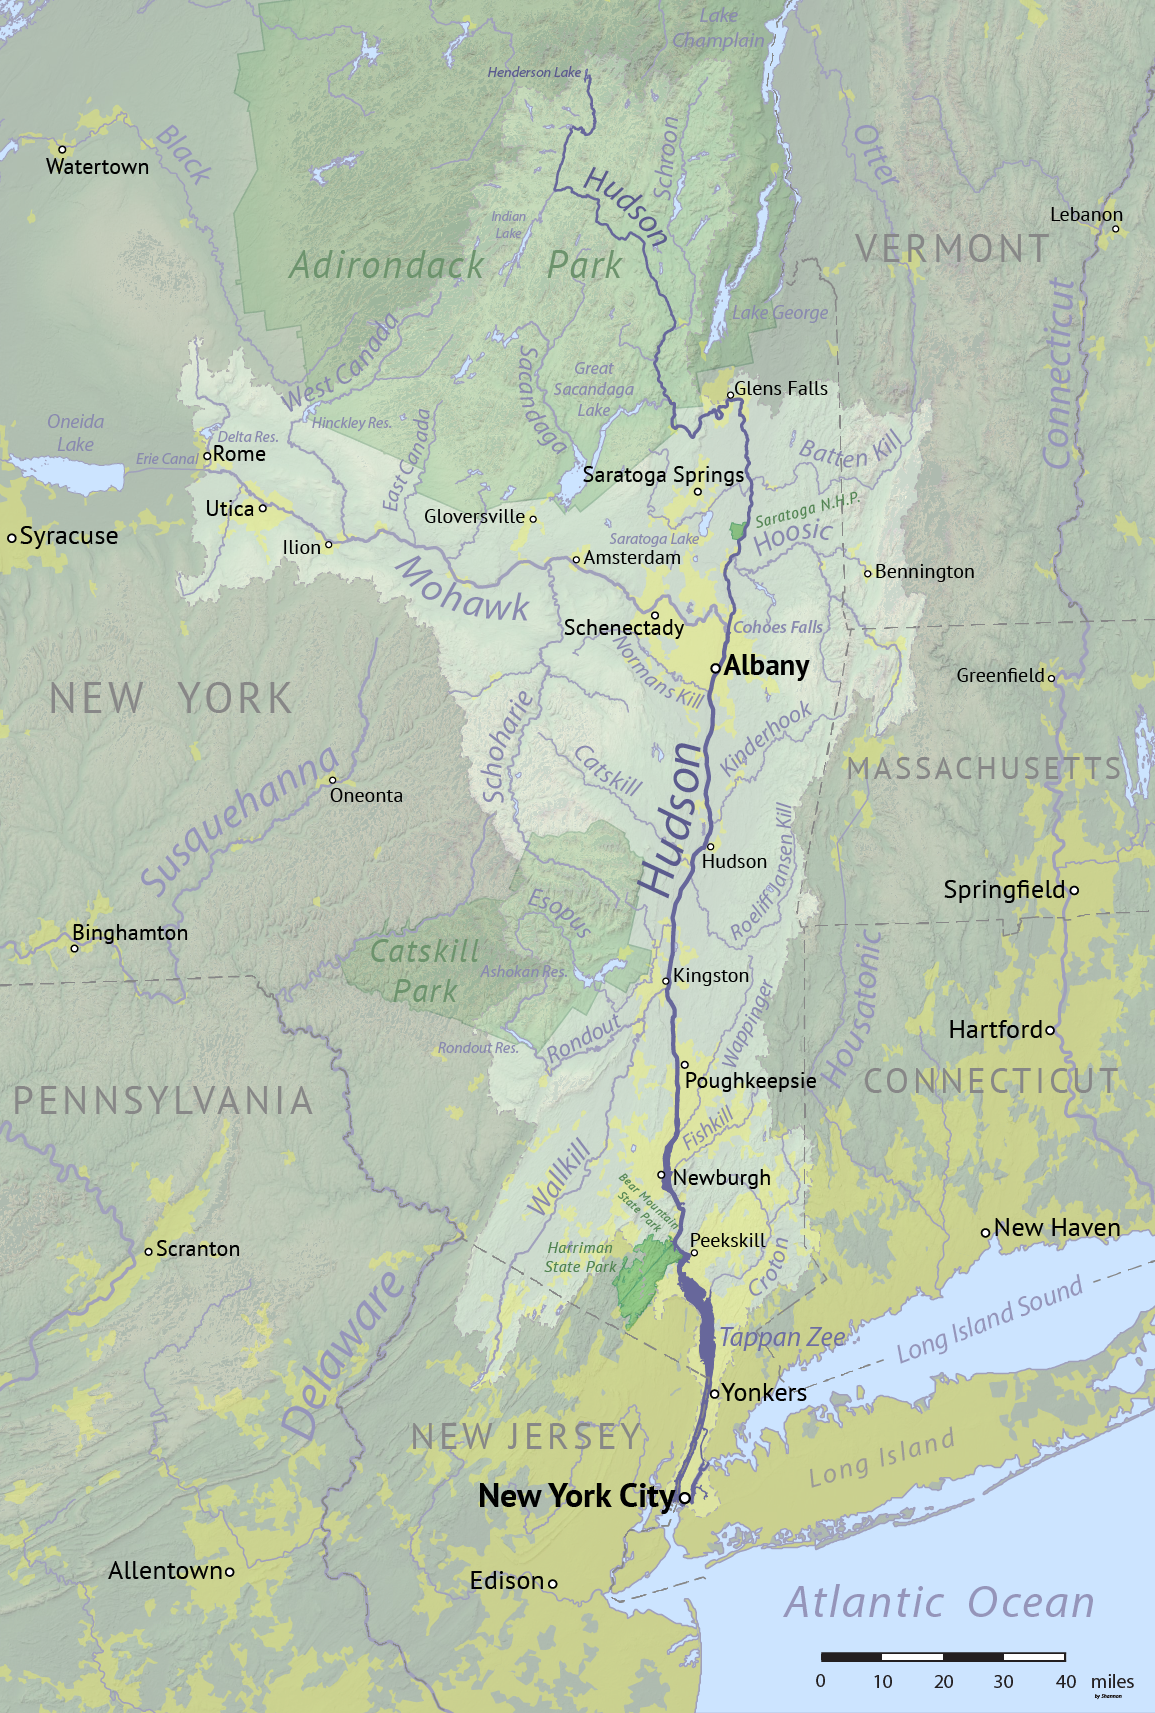 Hudson river map. Река Гудзон на карте Северной Америки. Озеро Гудзон Нью Йорк. Река Гудзон в Нью-Йорке на карте. Гудзон река в США на карте.